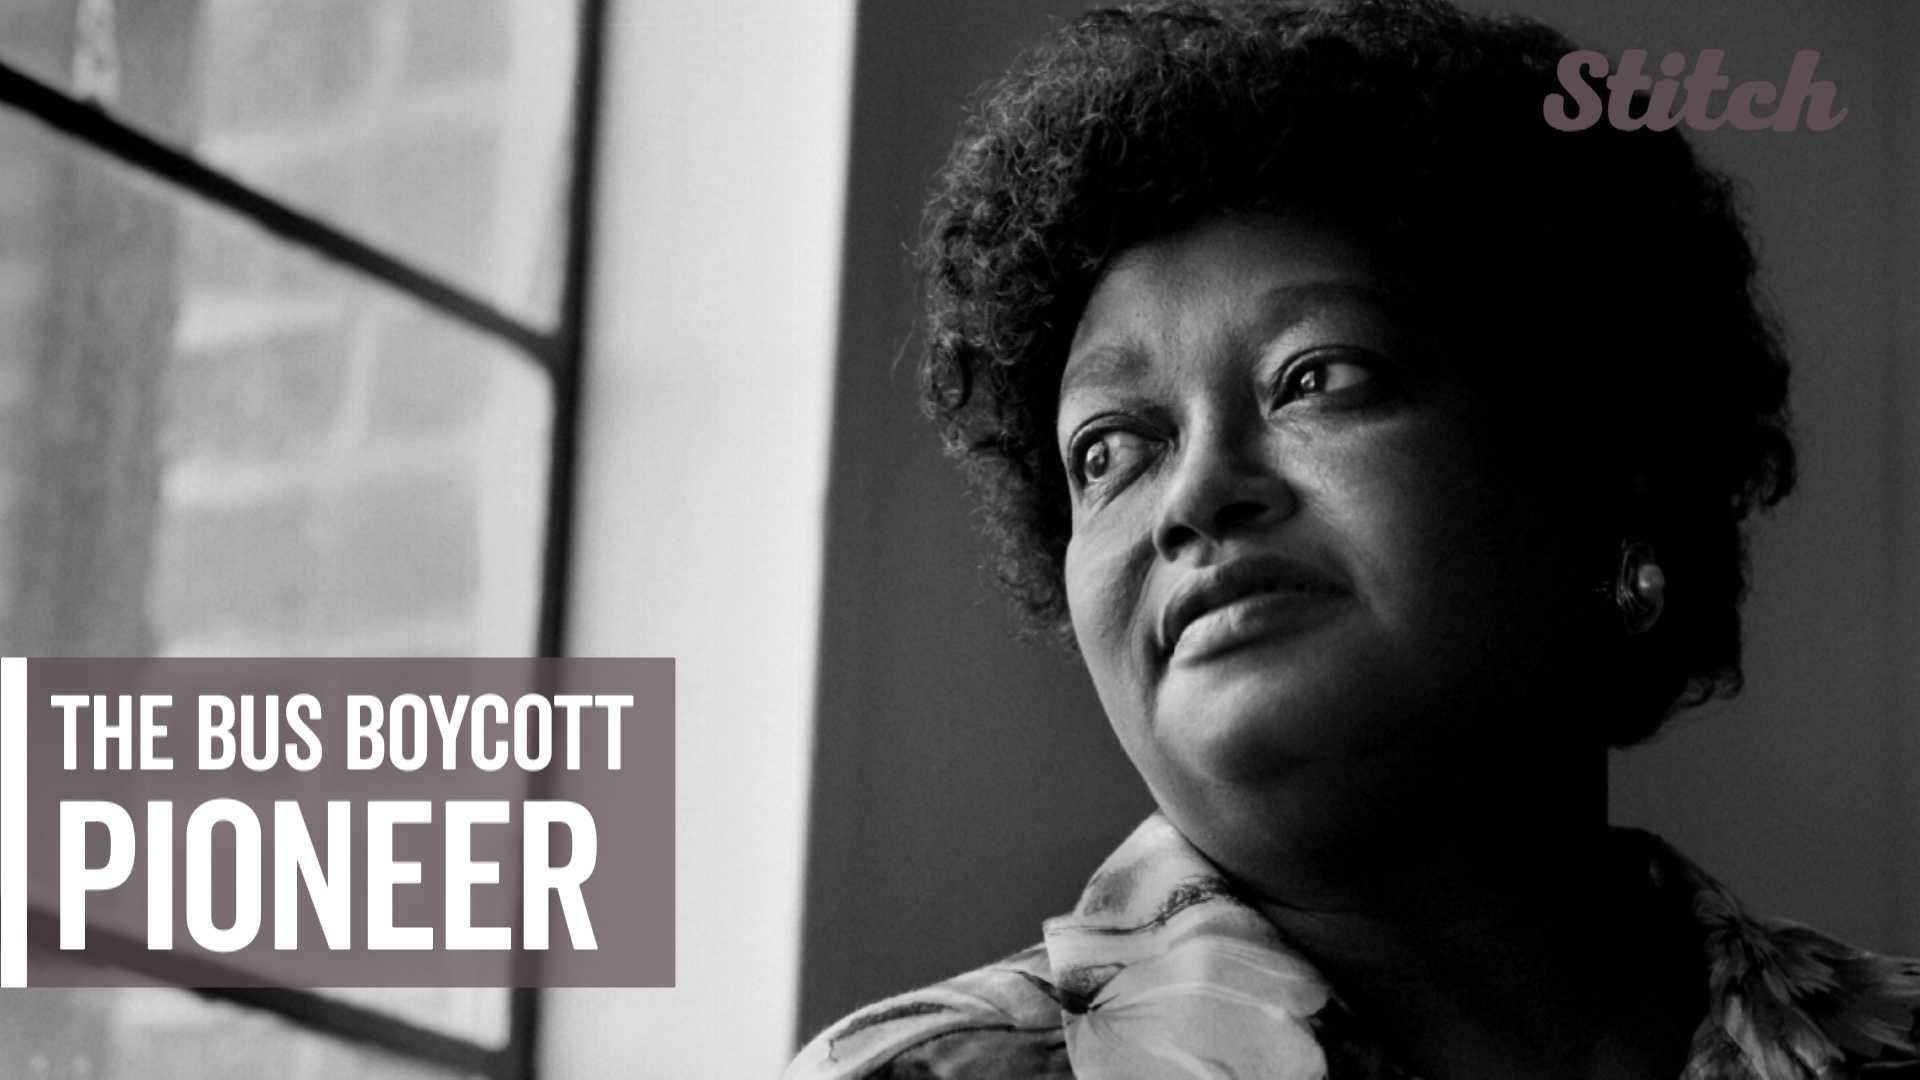 Claudette Colvin, the Alabama bus boycott pioneer